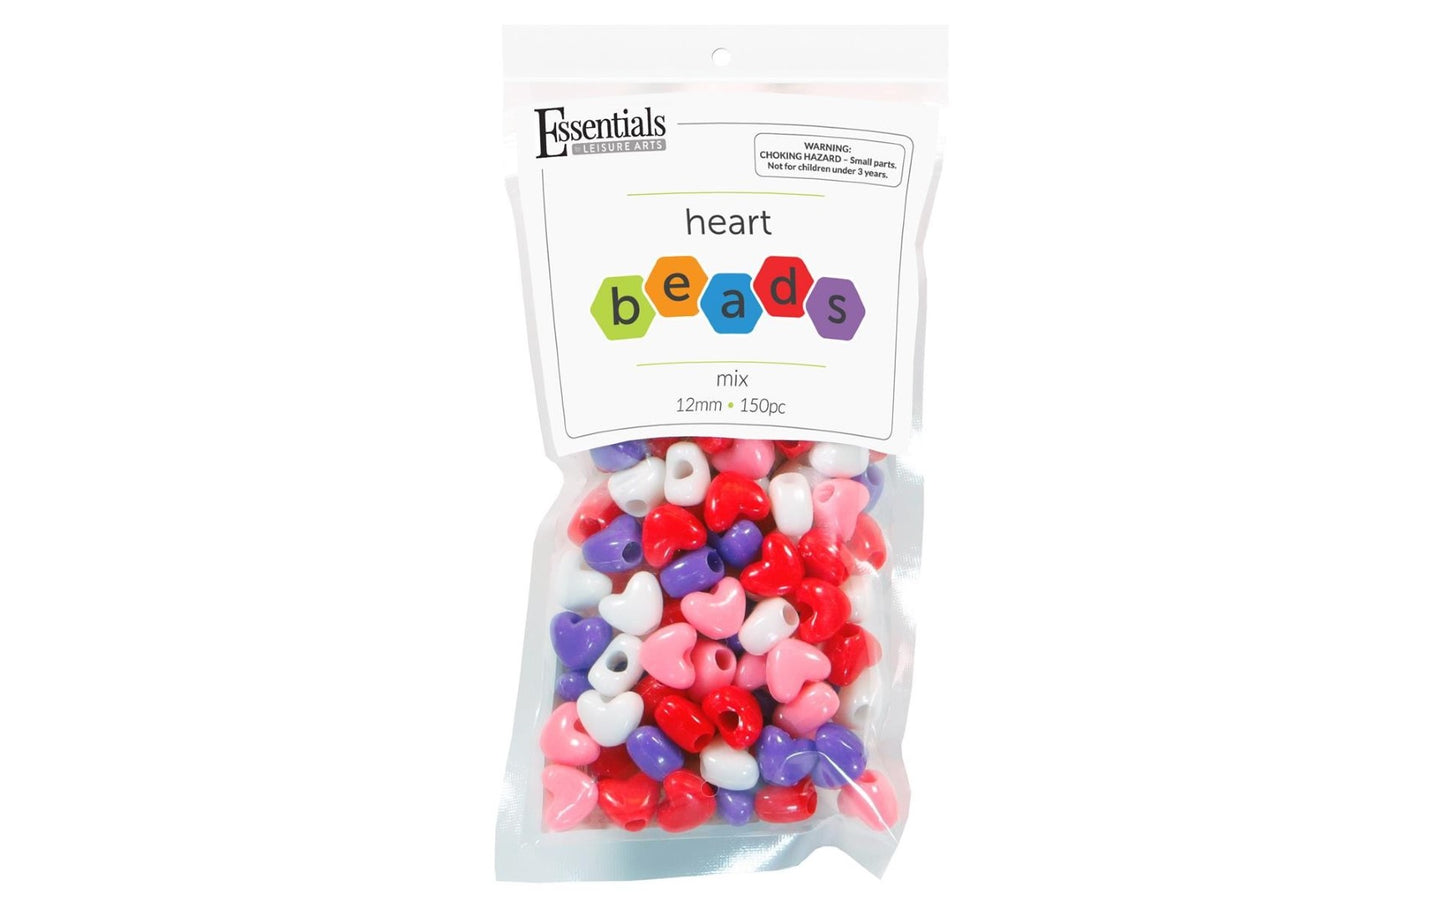 Heart beads mix 12mm 150pcs